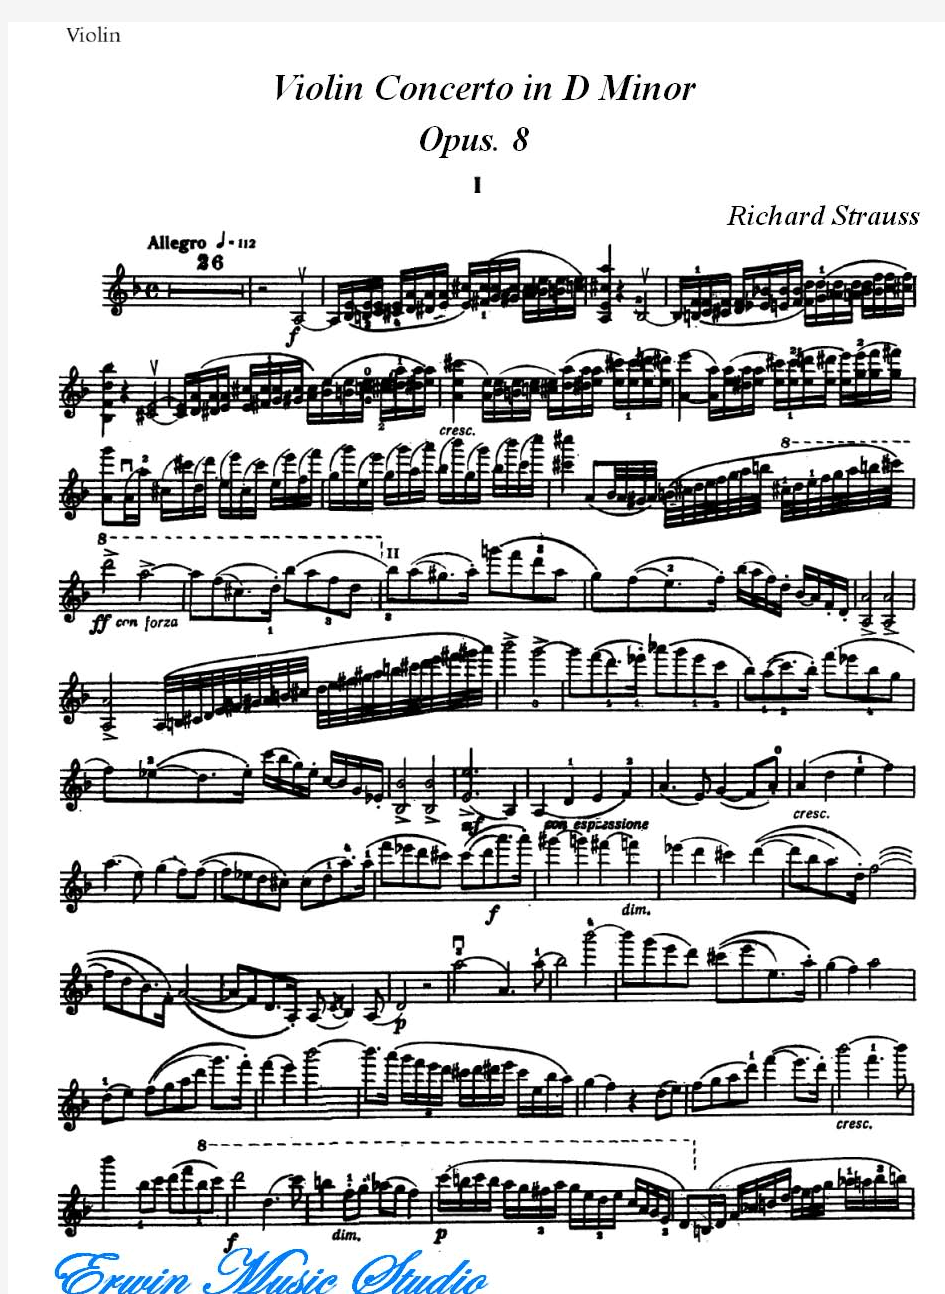 2.Violin理查·施特劳斯《D小调小提琴协奏曲》作品.8小提琴曲谱+钢琴伴奏曲谱  Richard Strauss